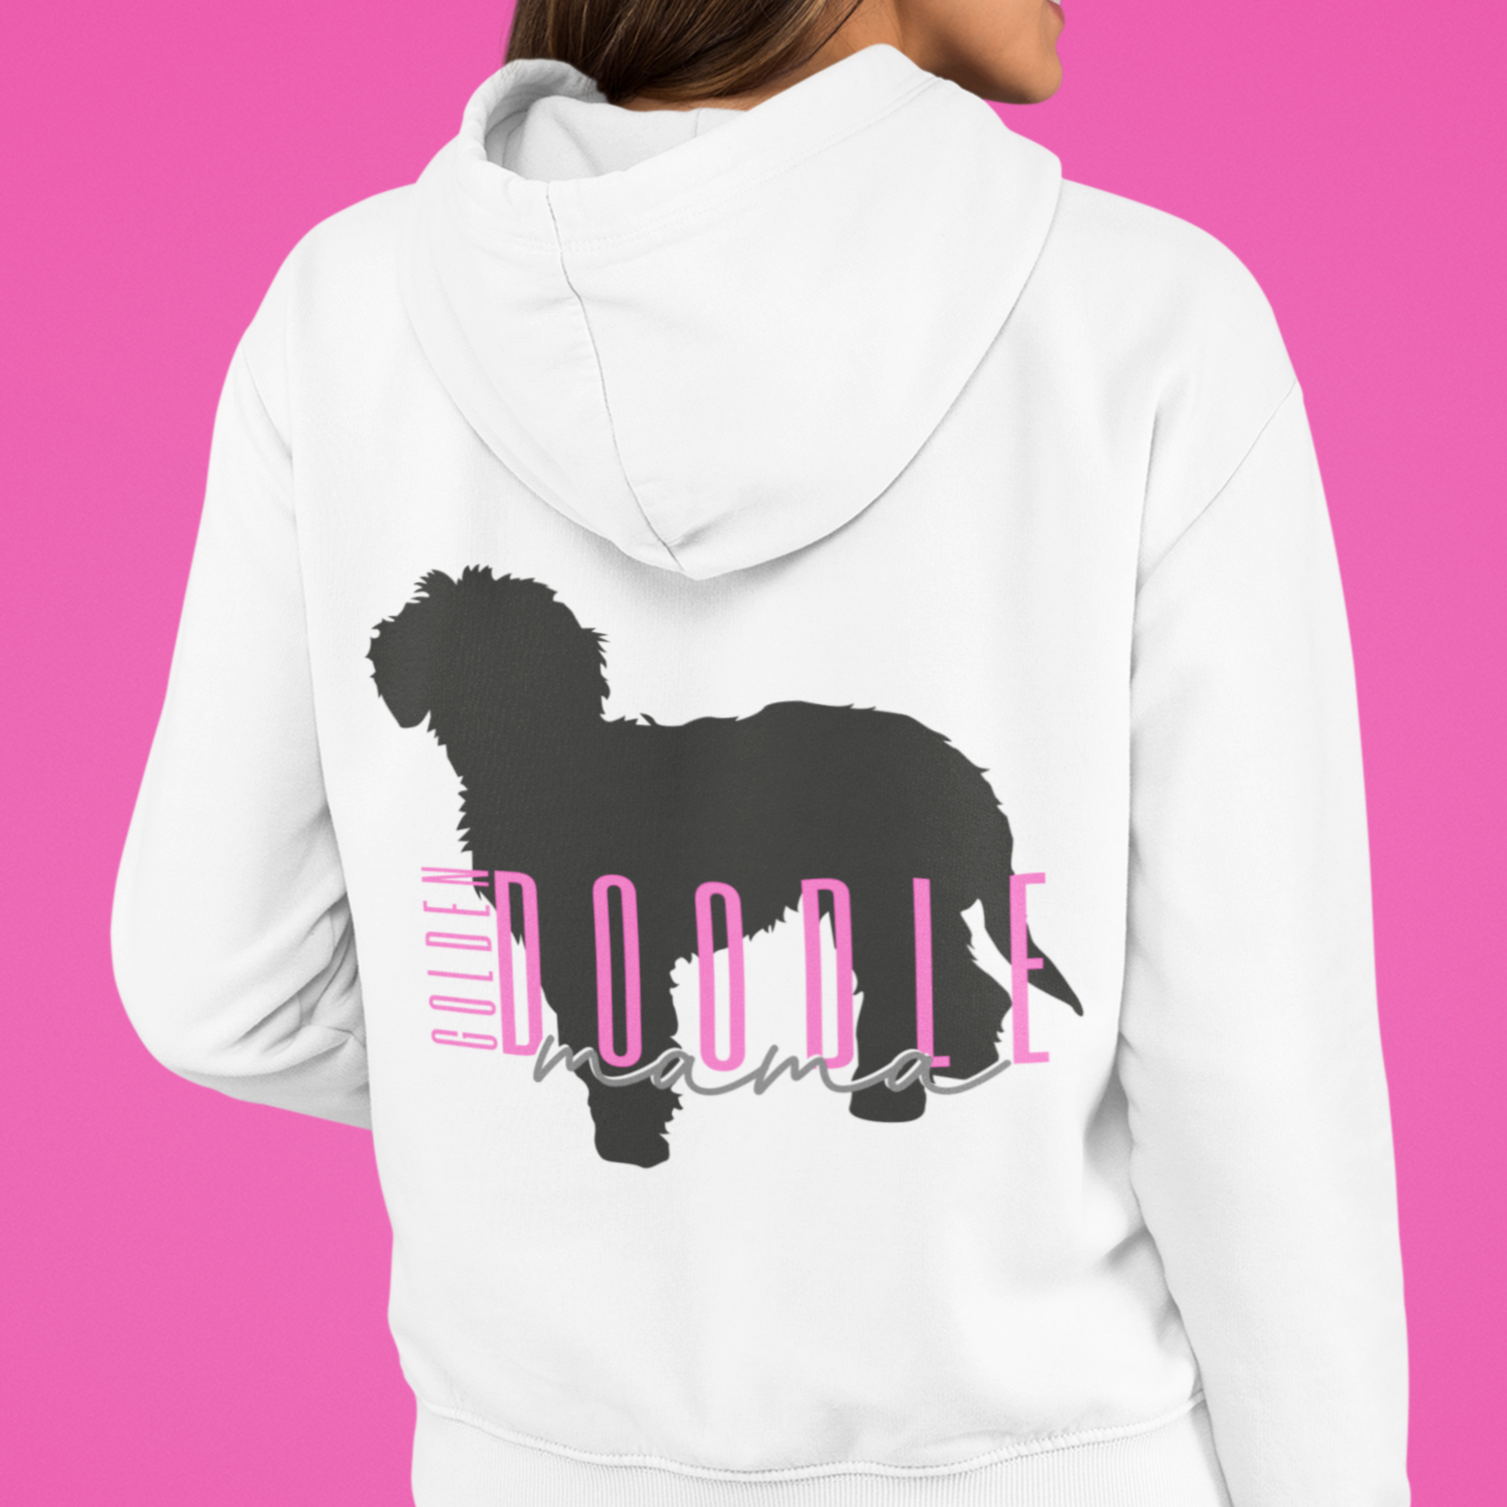 Custom Hoodies & Sweatshirts Online in Toronto - Personalized